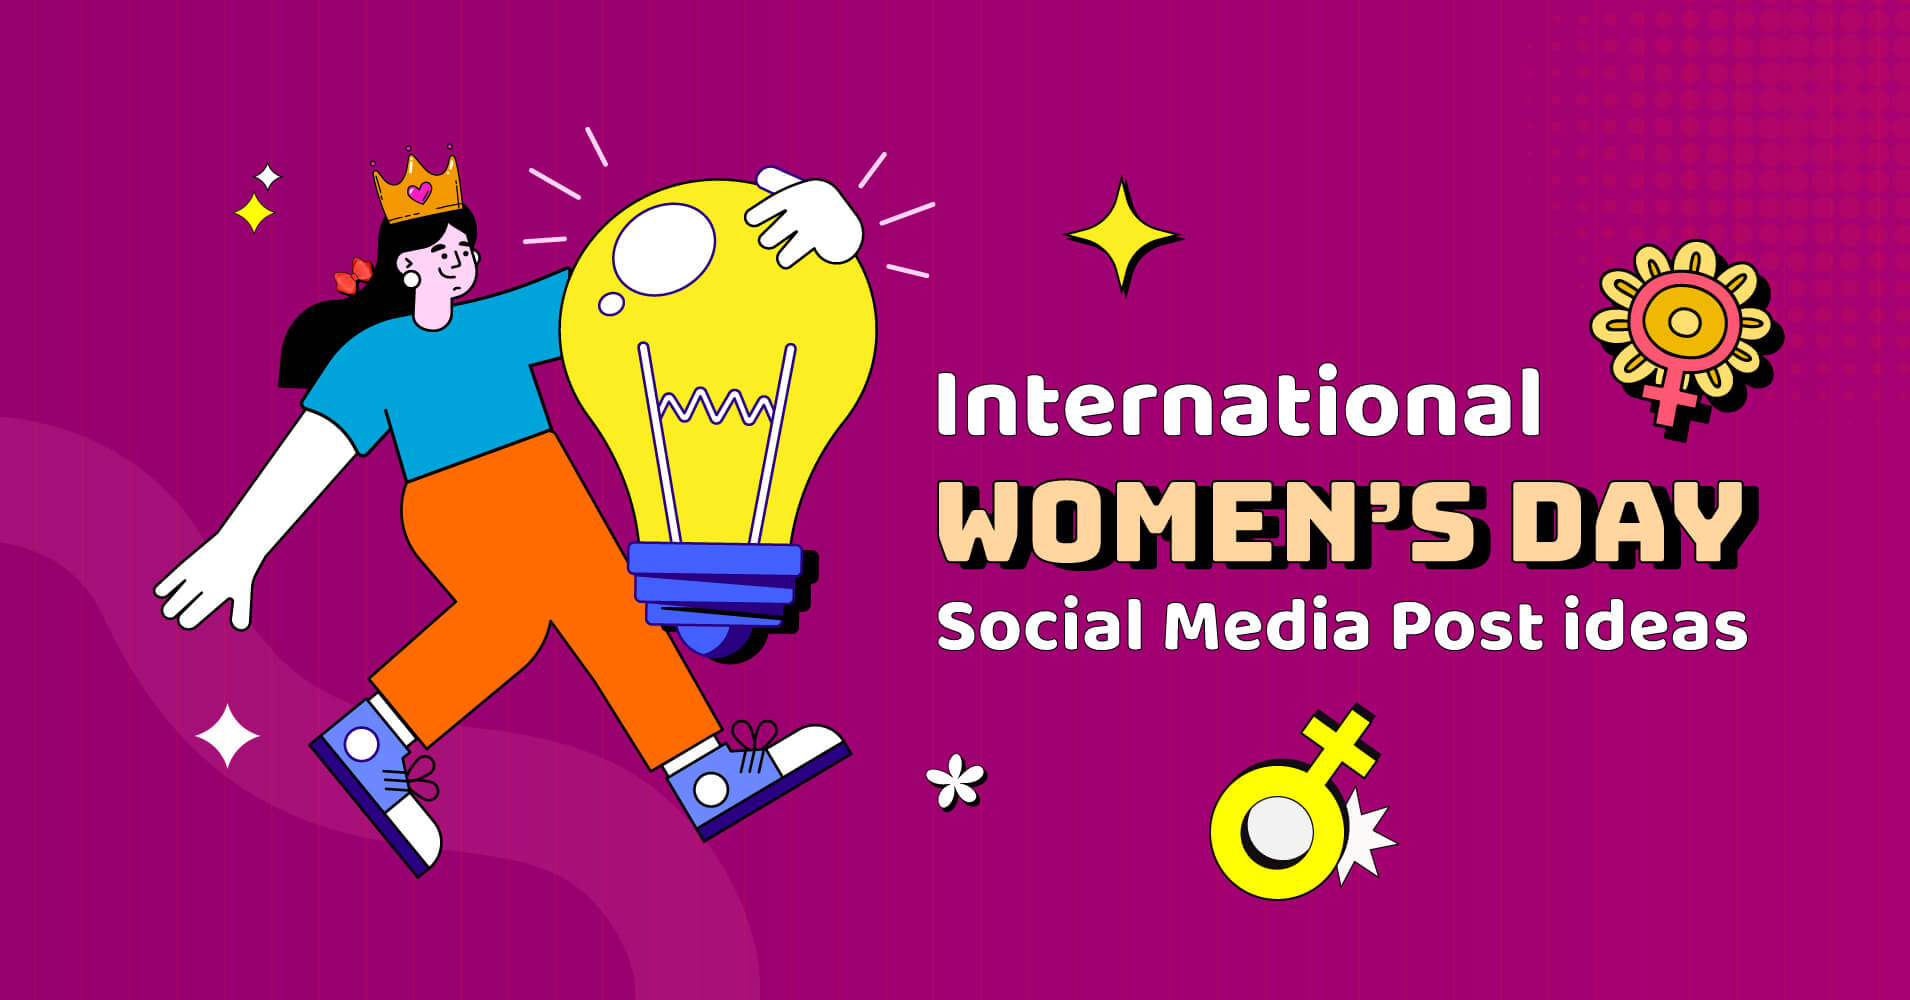 International Women's Day Social Media Post Ideas